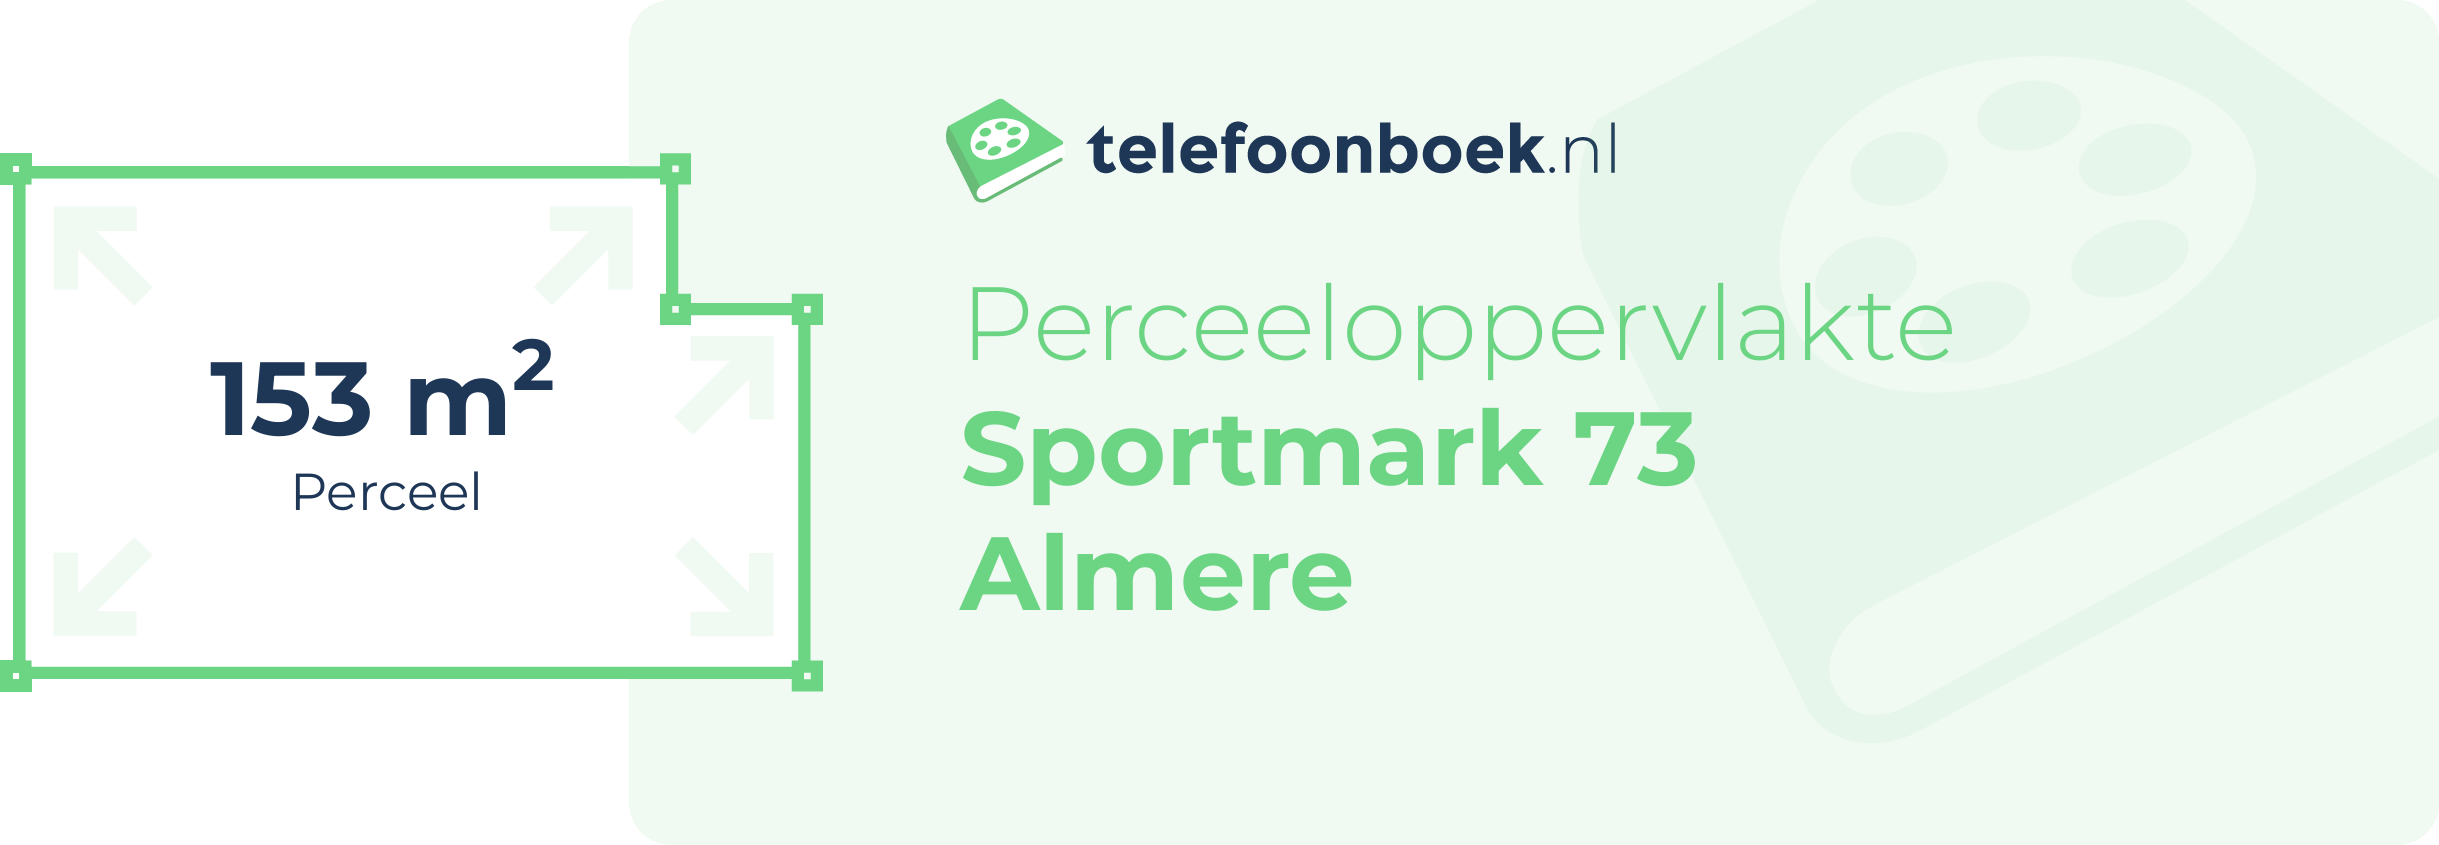 Perceeloppervlakte Sportmark 73 Almere